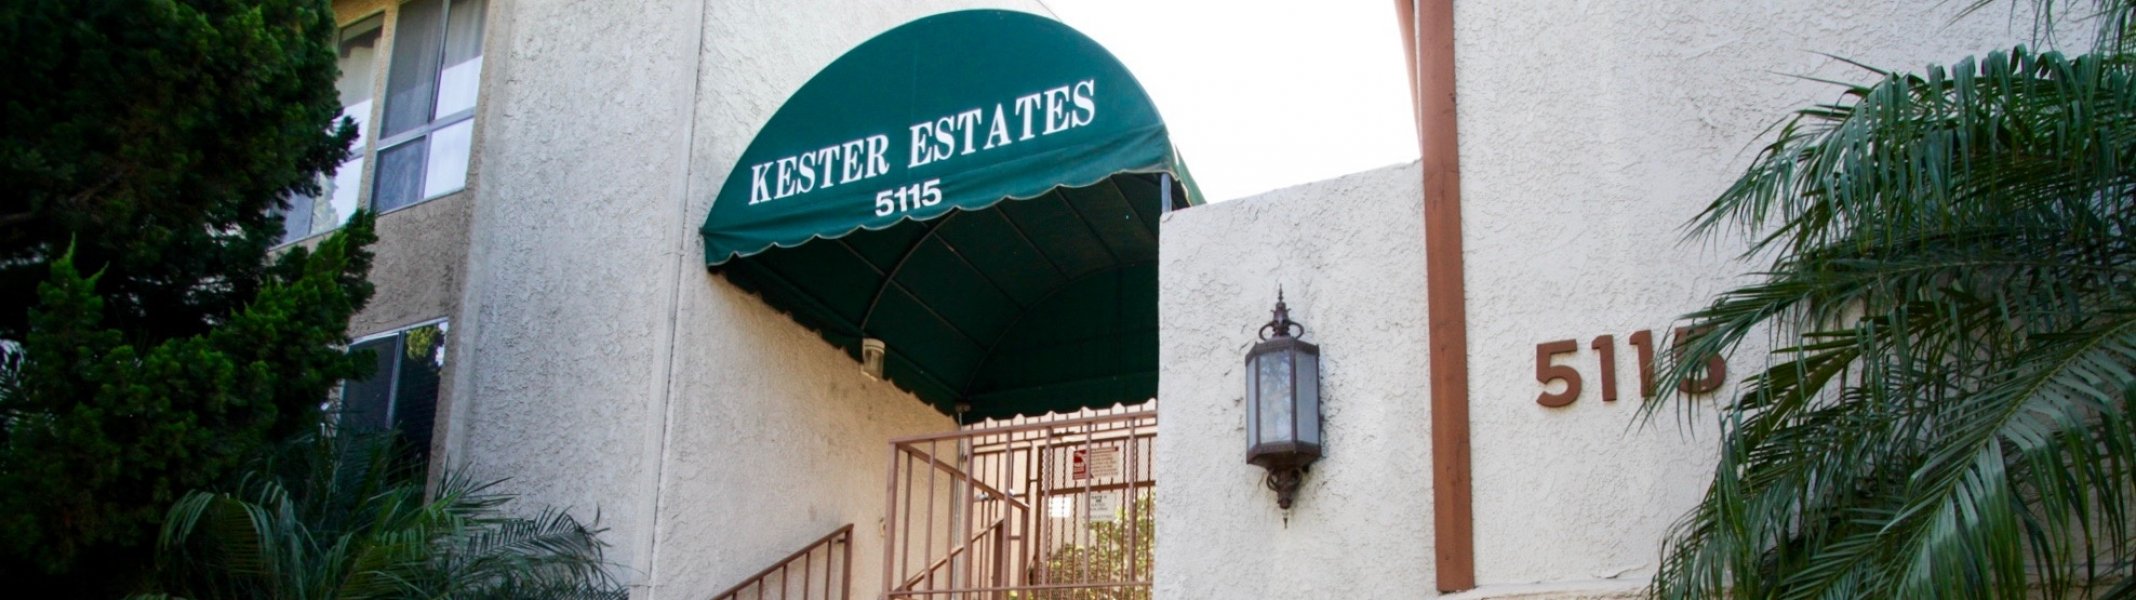 Kester Estates